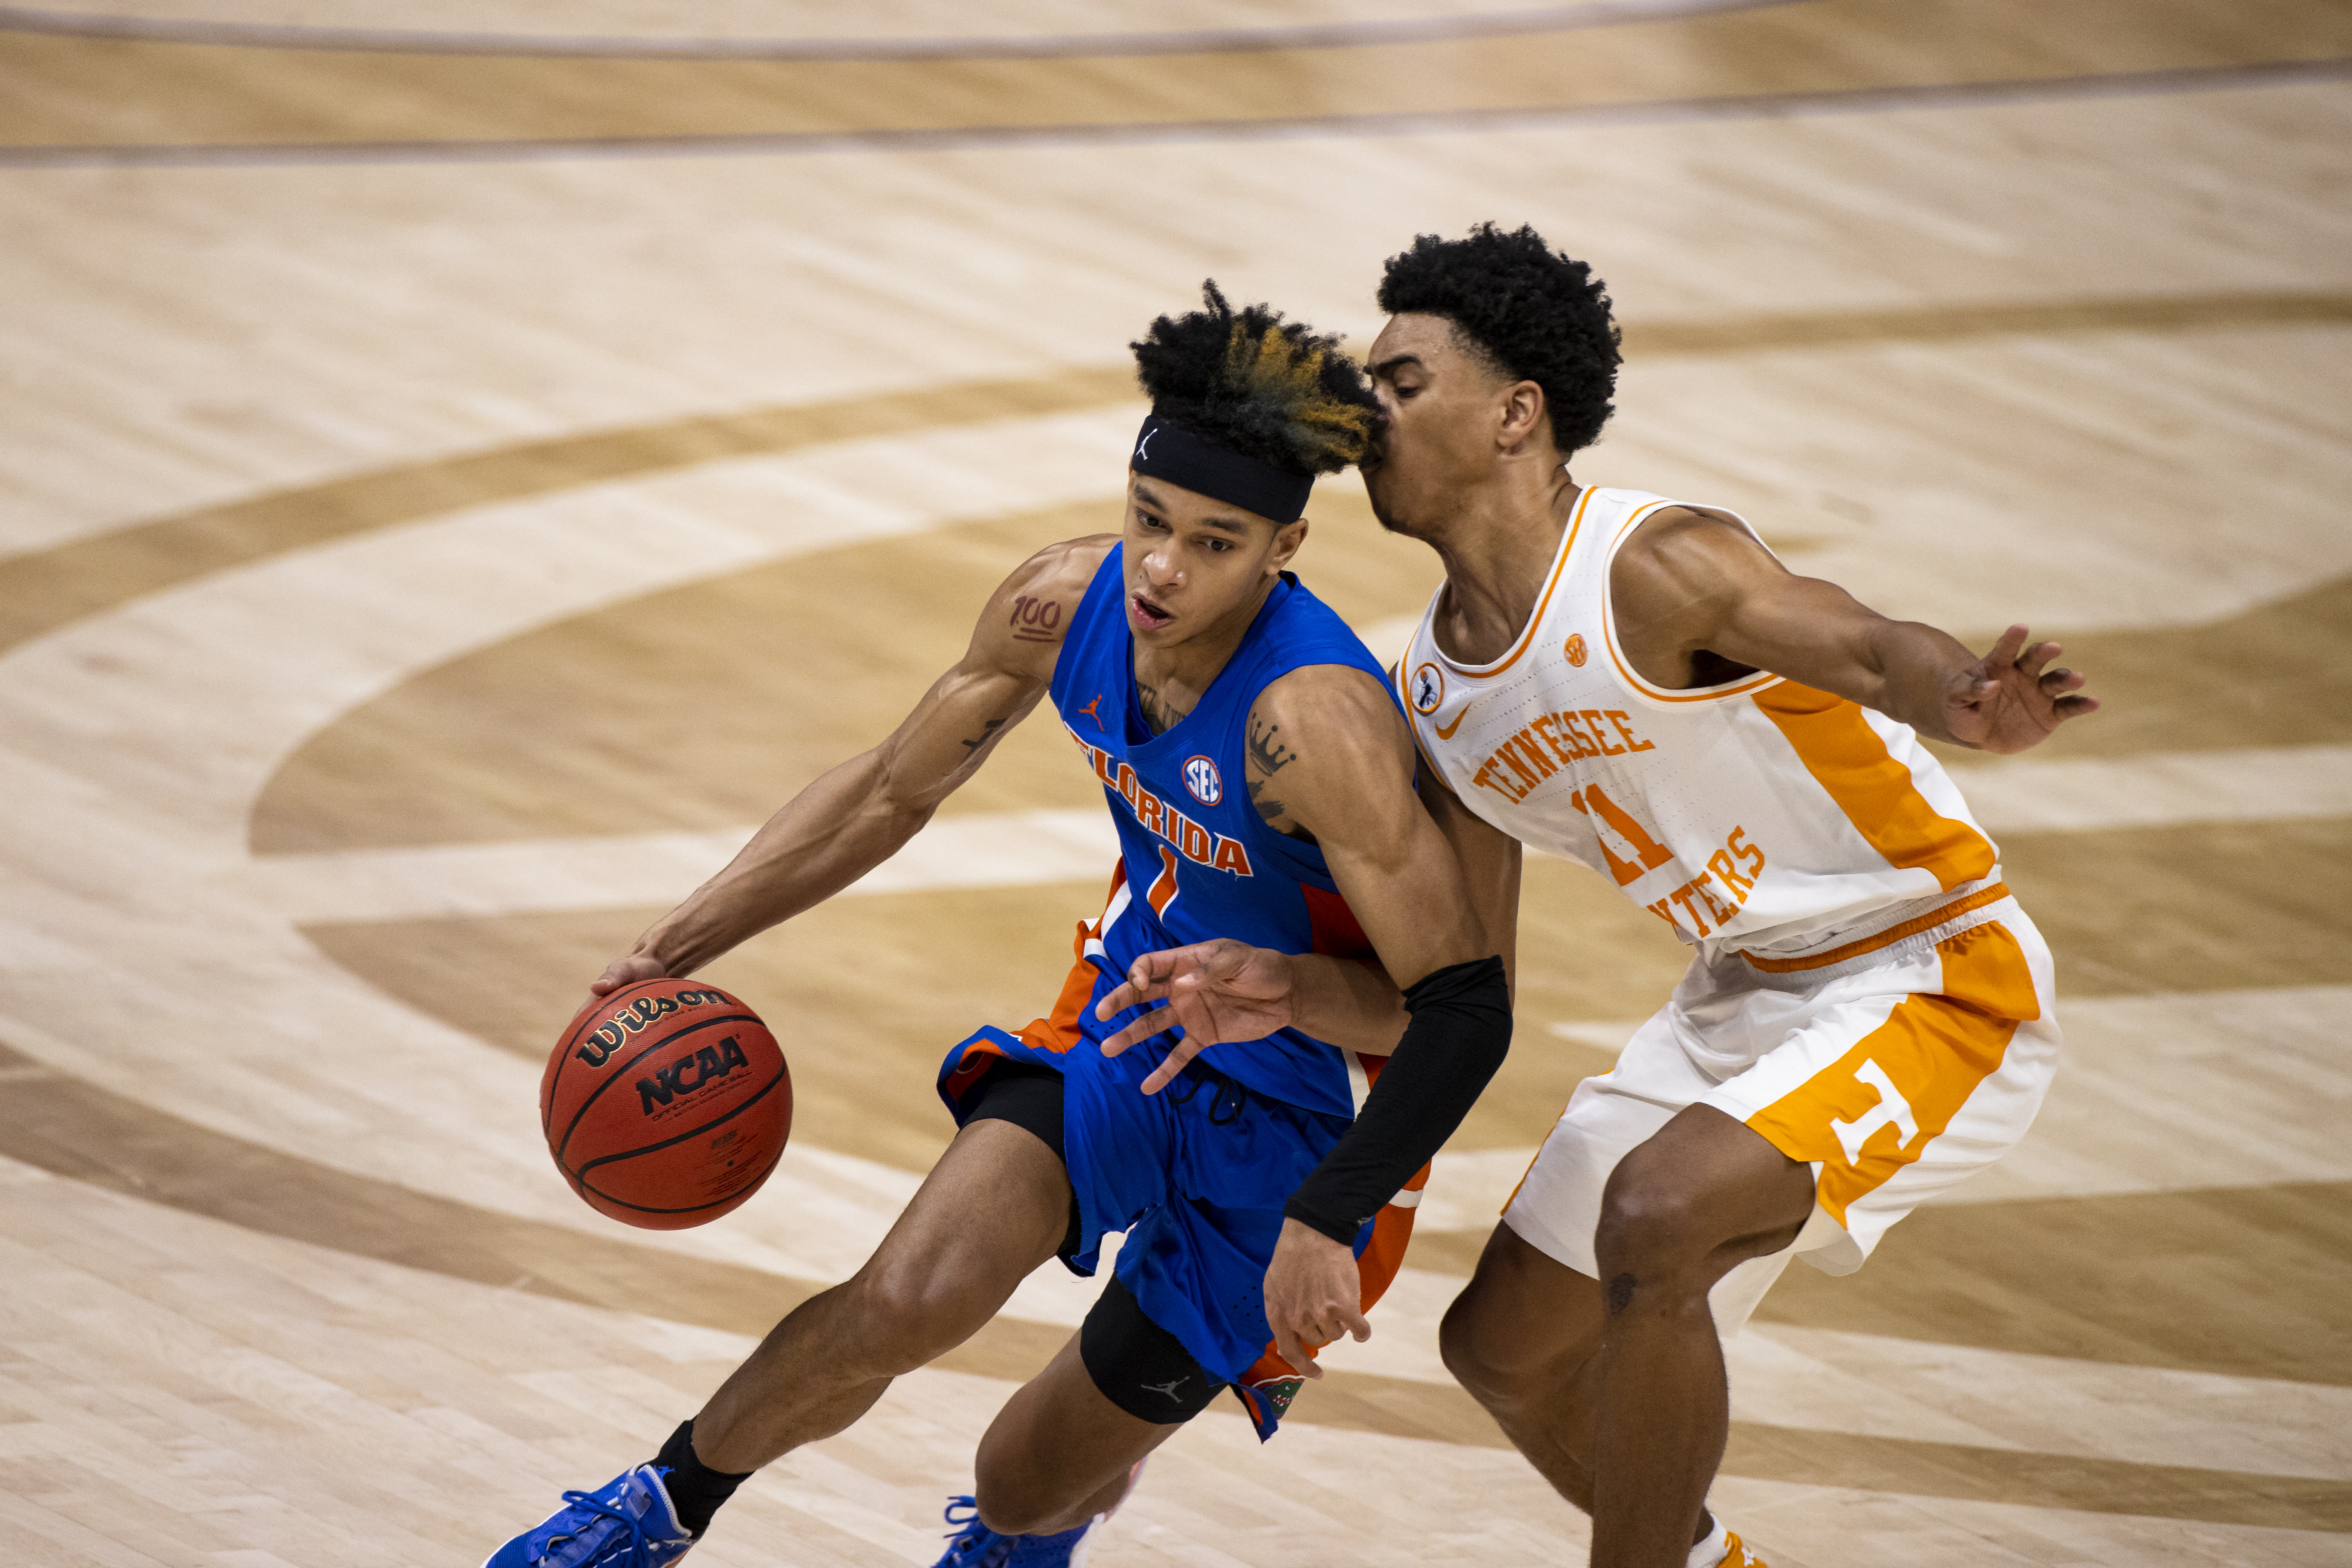 SEC Men’s Basketball Tournament - Tennessee v Florida